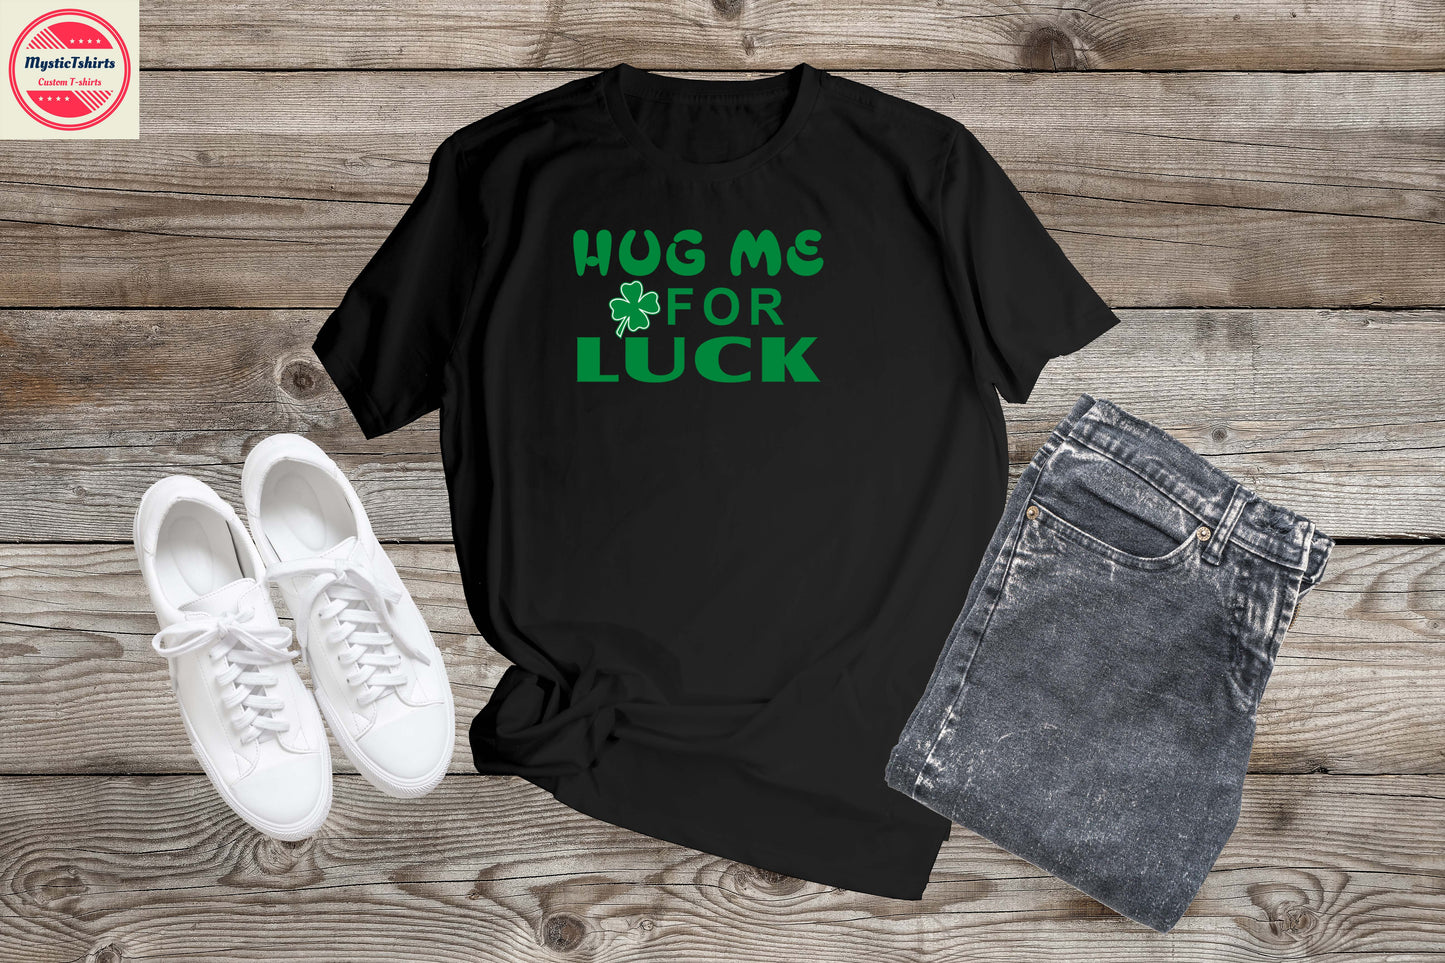 200. HUG ME FOR LUCK, Custom Made Shirt, Personalized T-Shirt, Custom Text, Make Your Own Shirt, Custom Tee